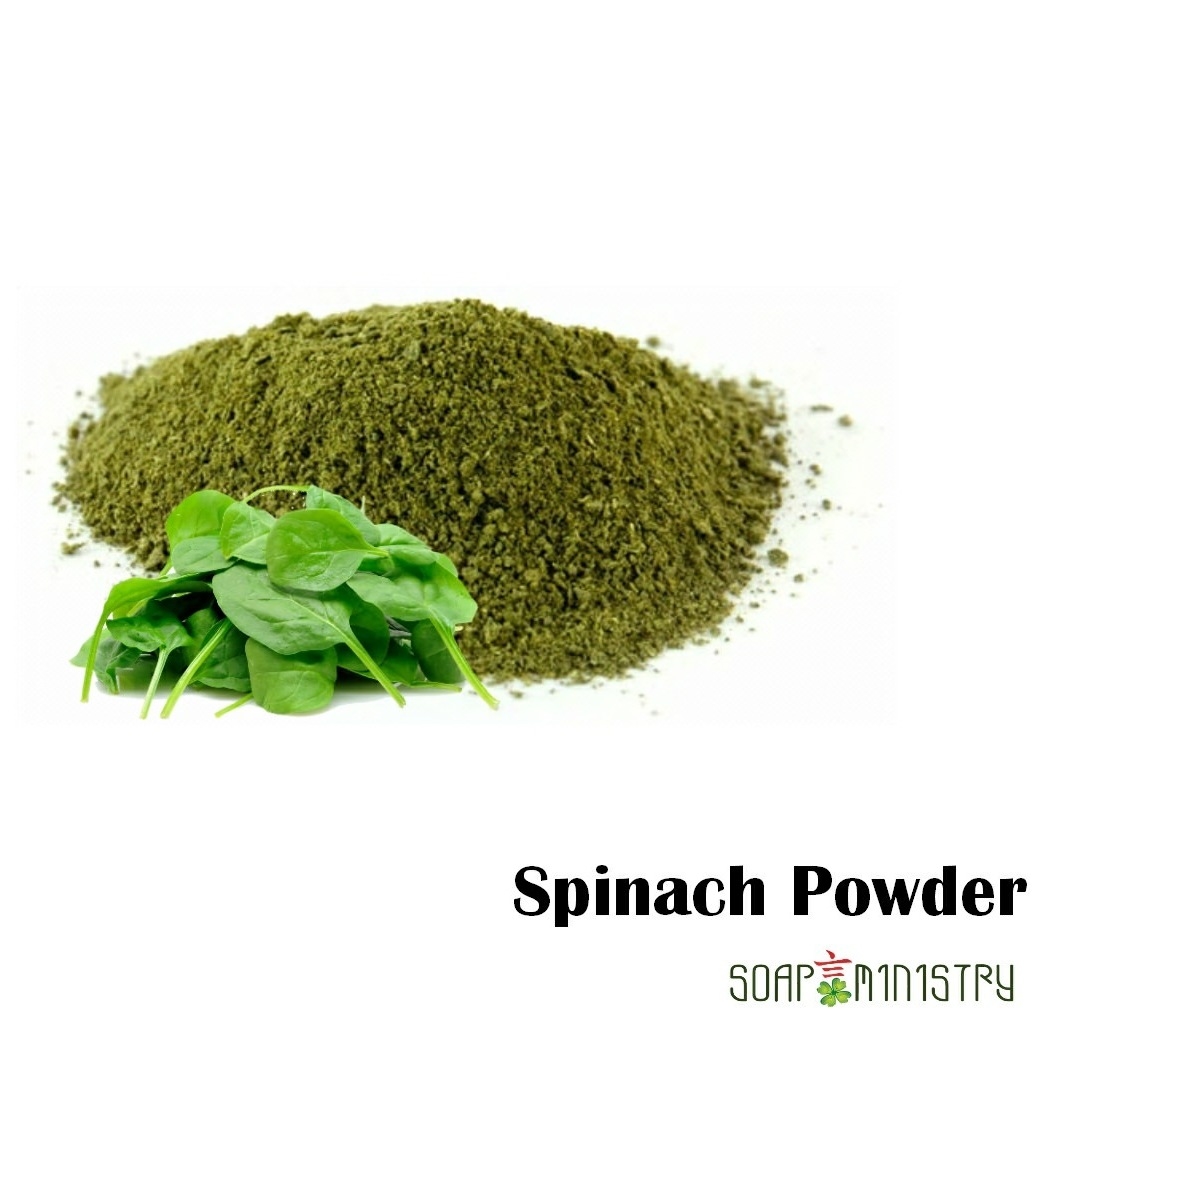 Spinach Powder 500g